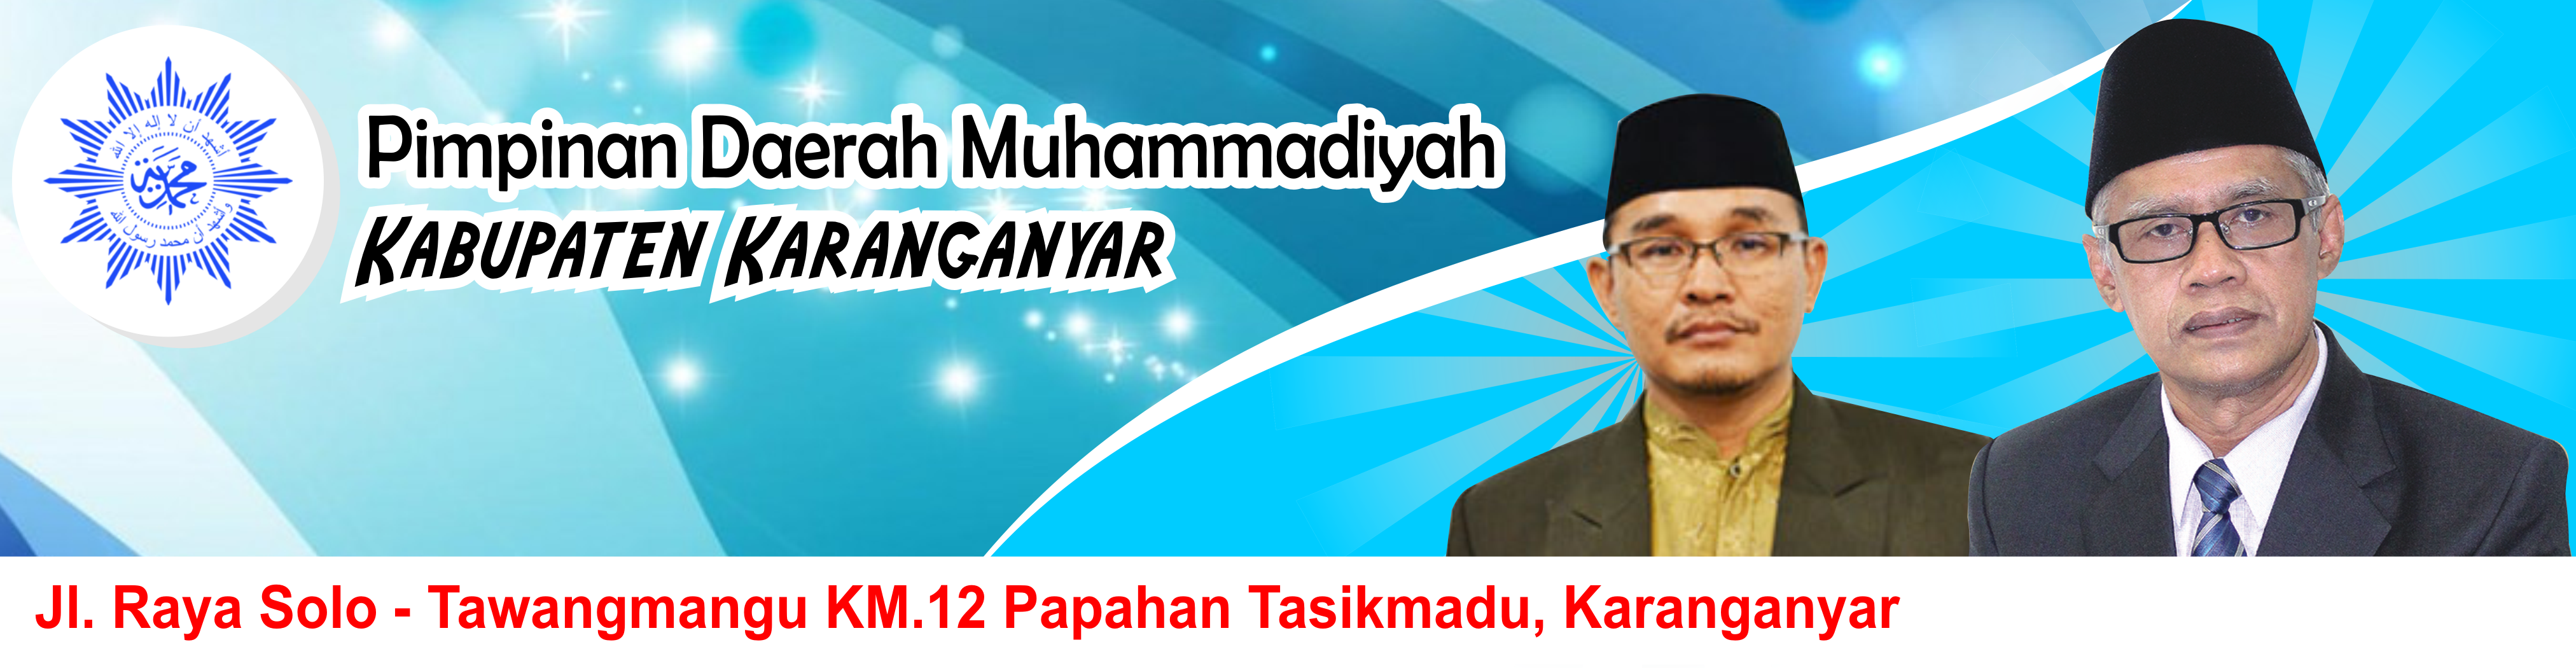 Lembaga Seni Budaya dan Olahraga Pimpinan Daerah Muhammadiyah Kabupaten Karanganyar